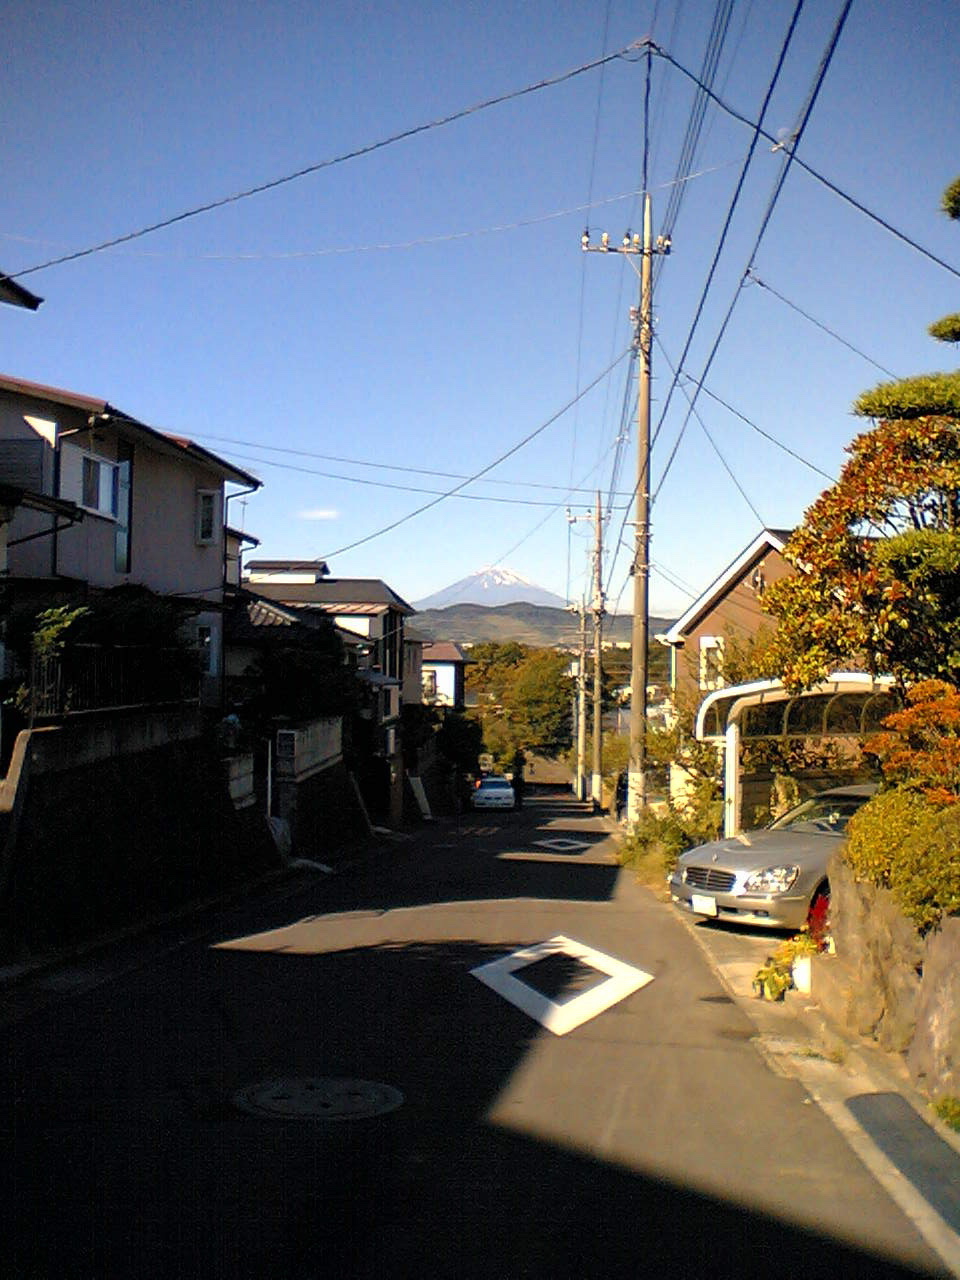 Mt. Fuji from street in Ninomiya, Japan